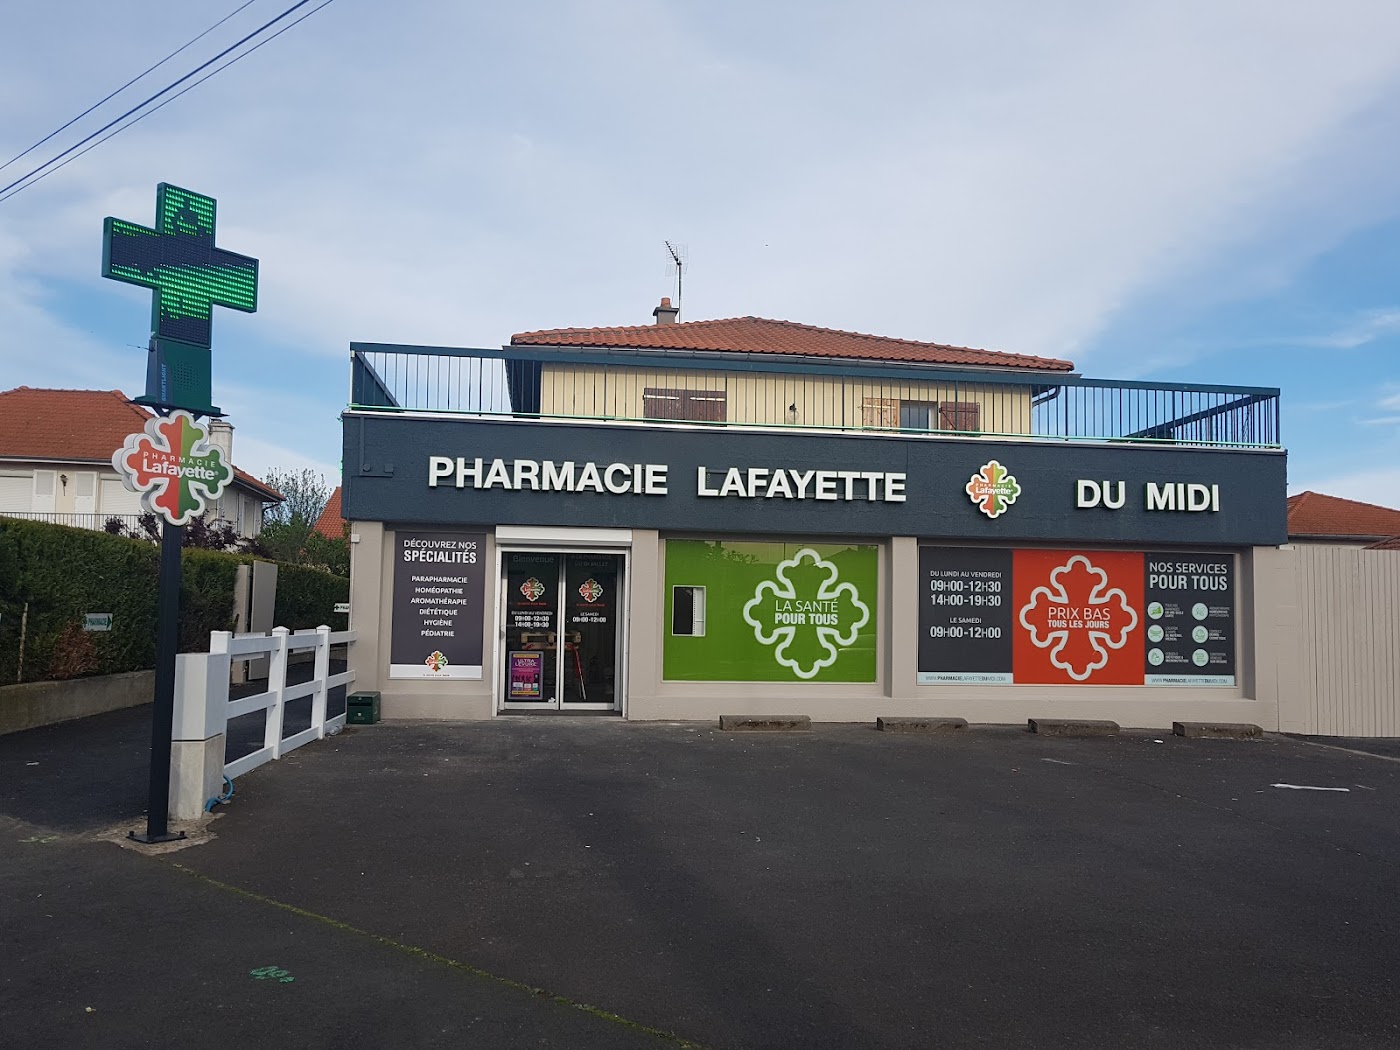 Pharmacie Lafayette du Midi